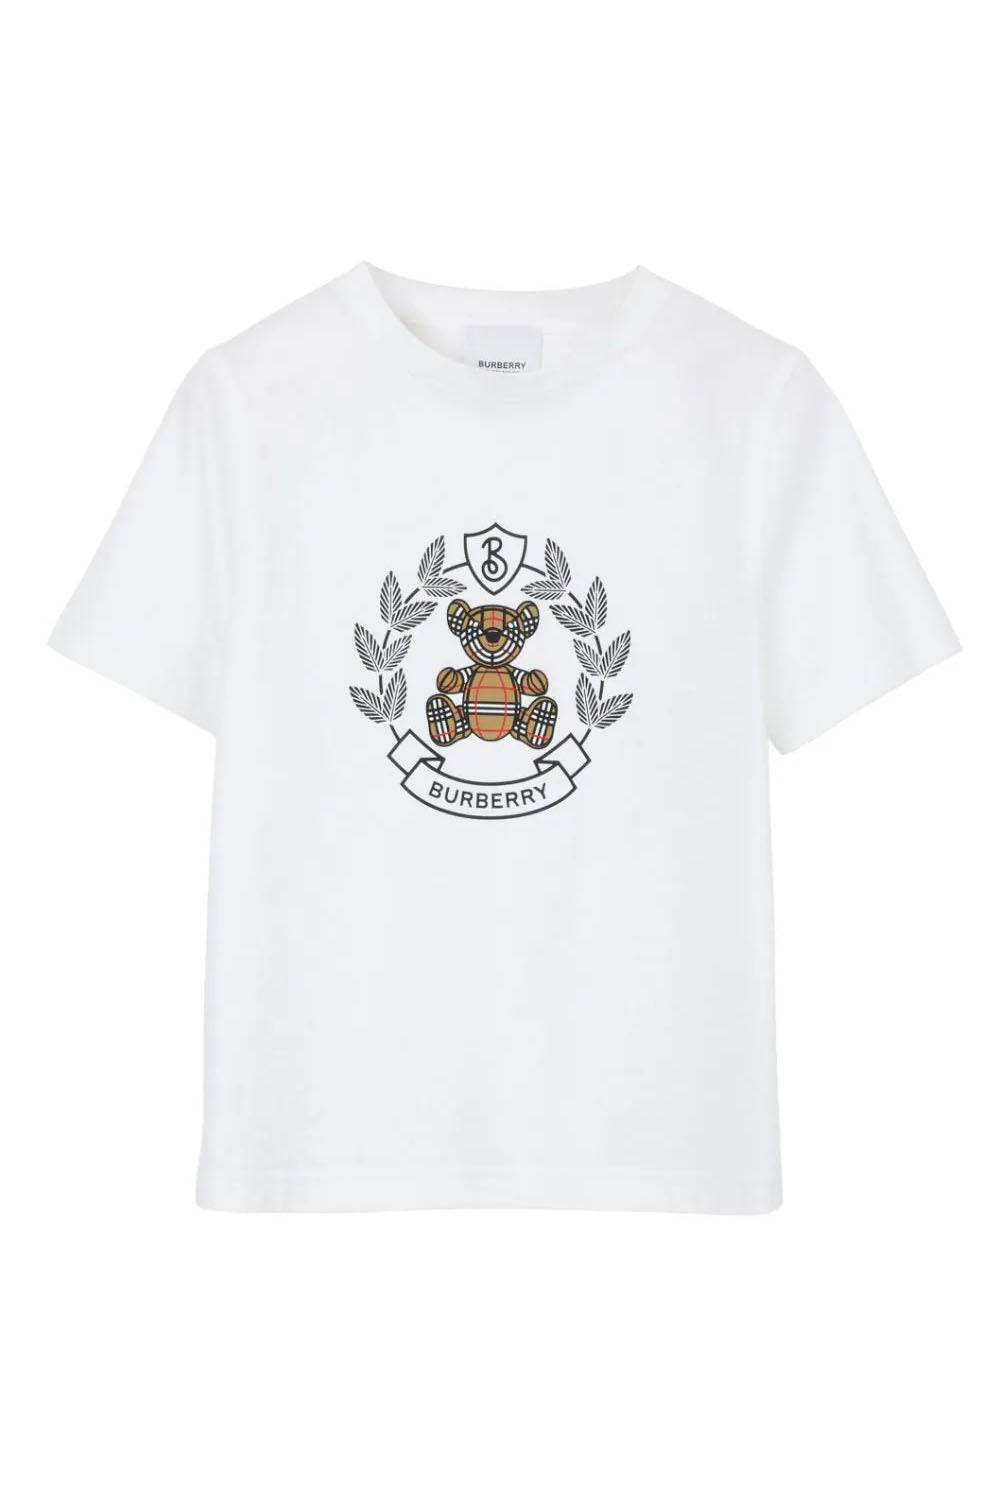 ​Thomas Bear Print Cotton T-shirt for Girls - Maison7